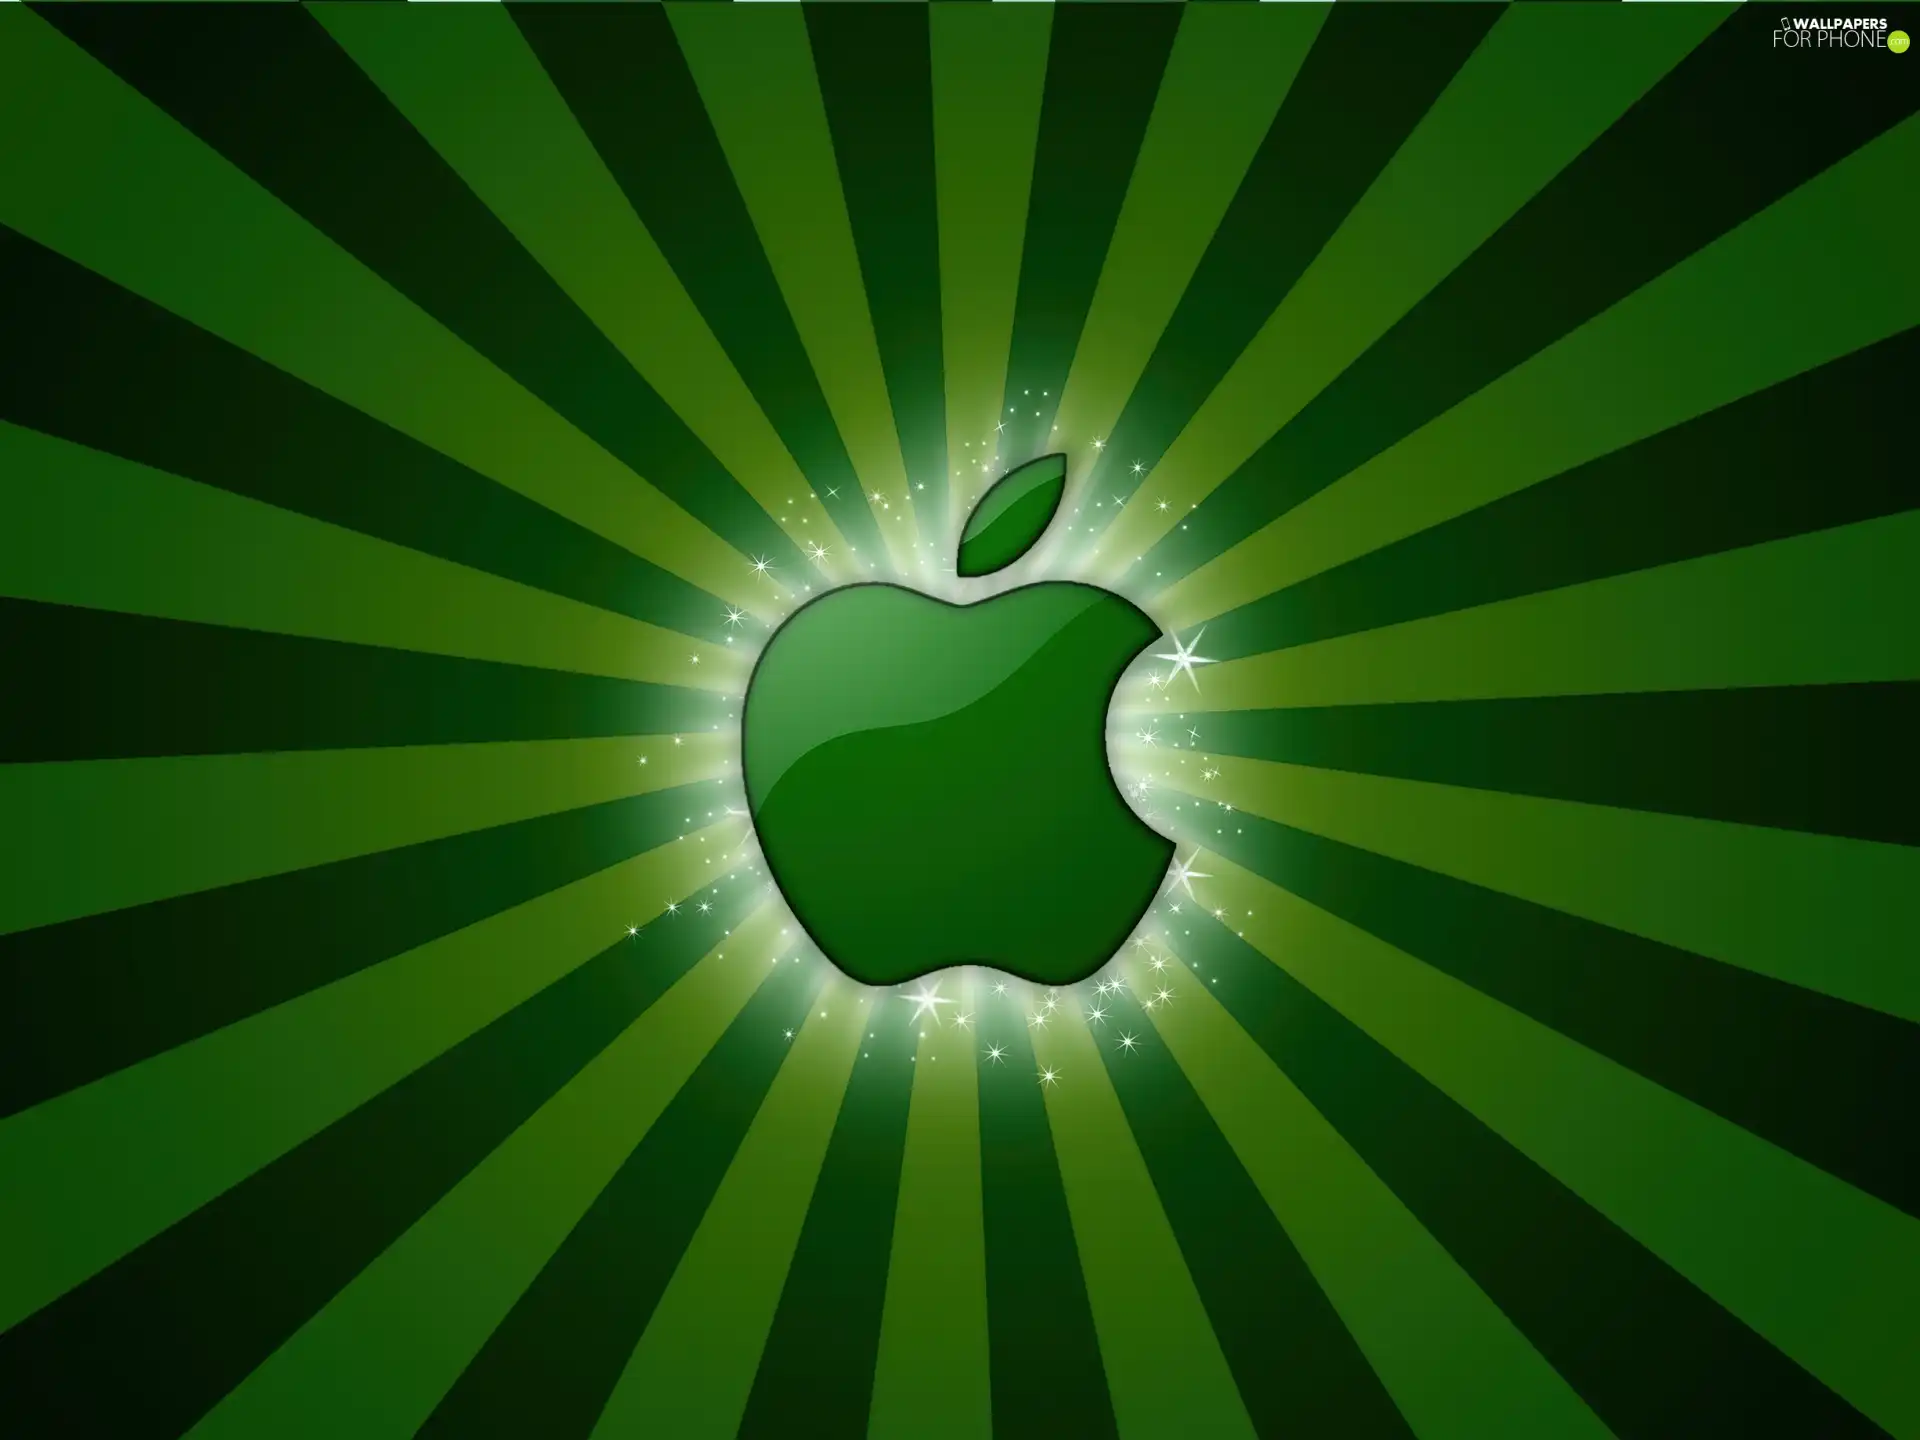 Apple, glowing, green ones